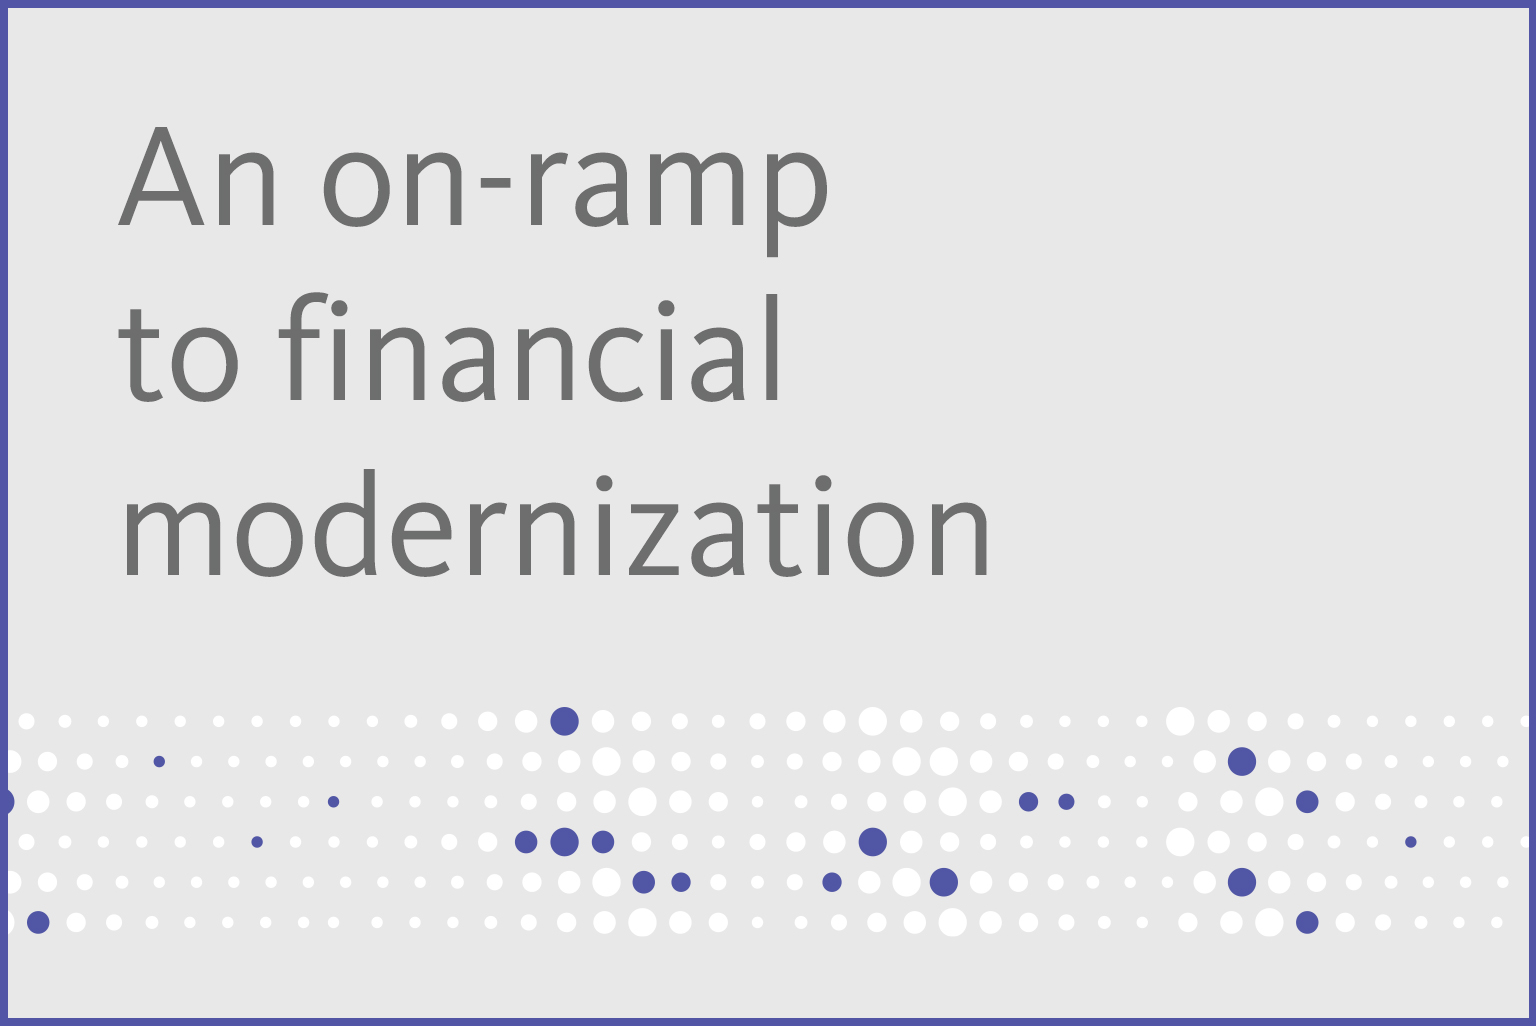  An on-ramp to financial modernization